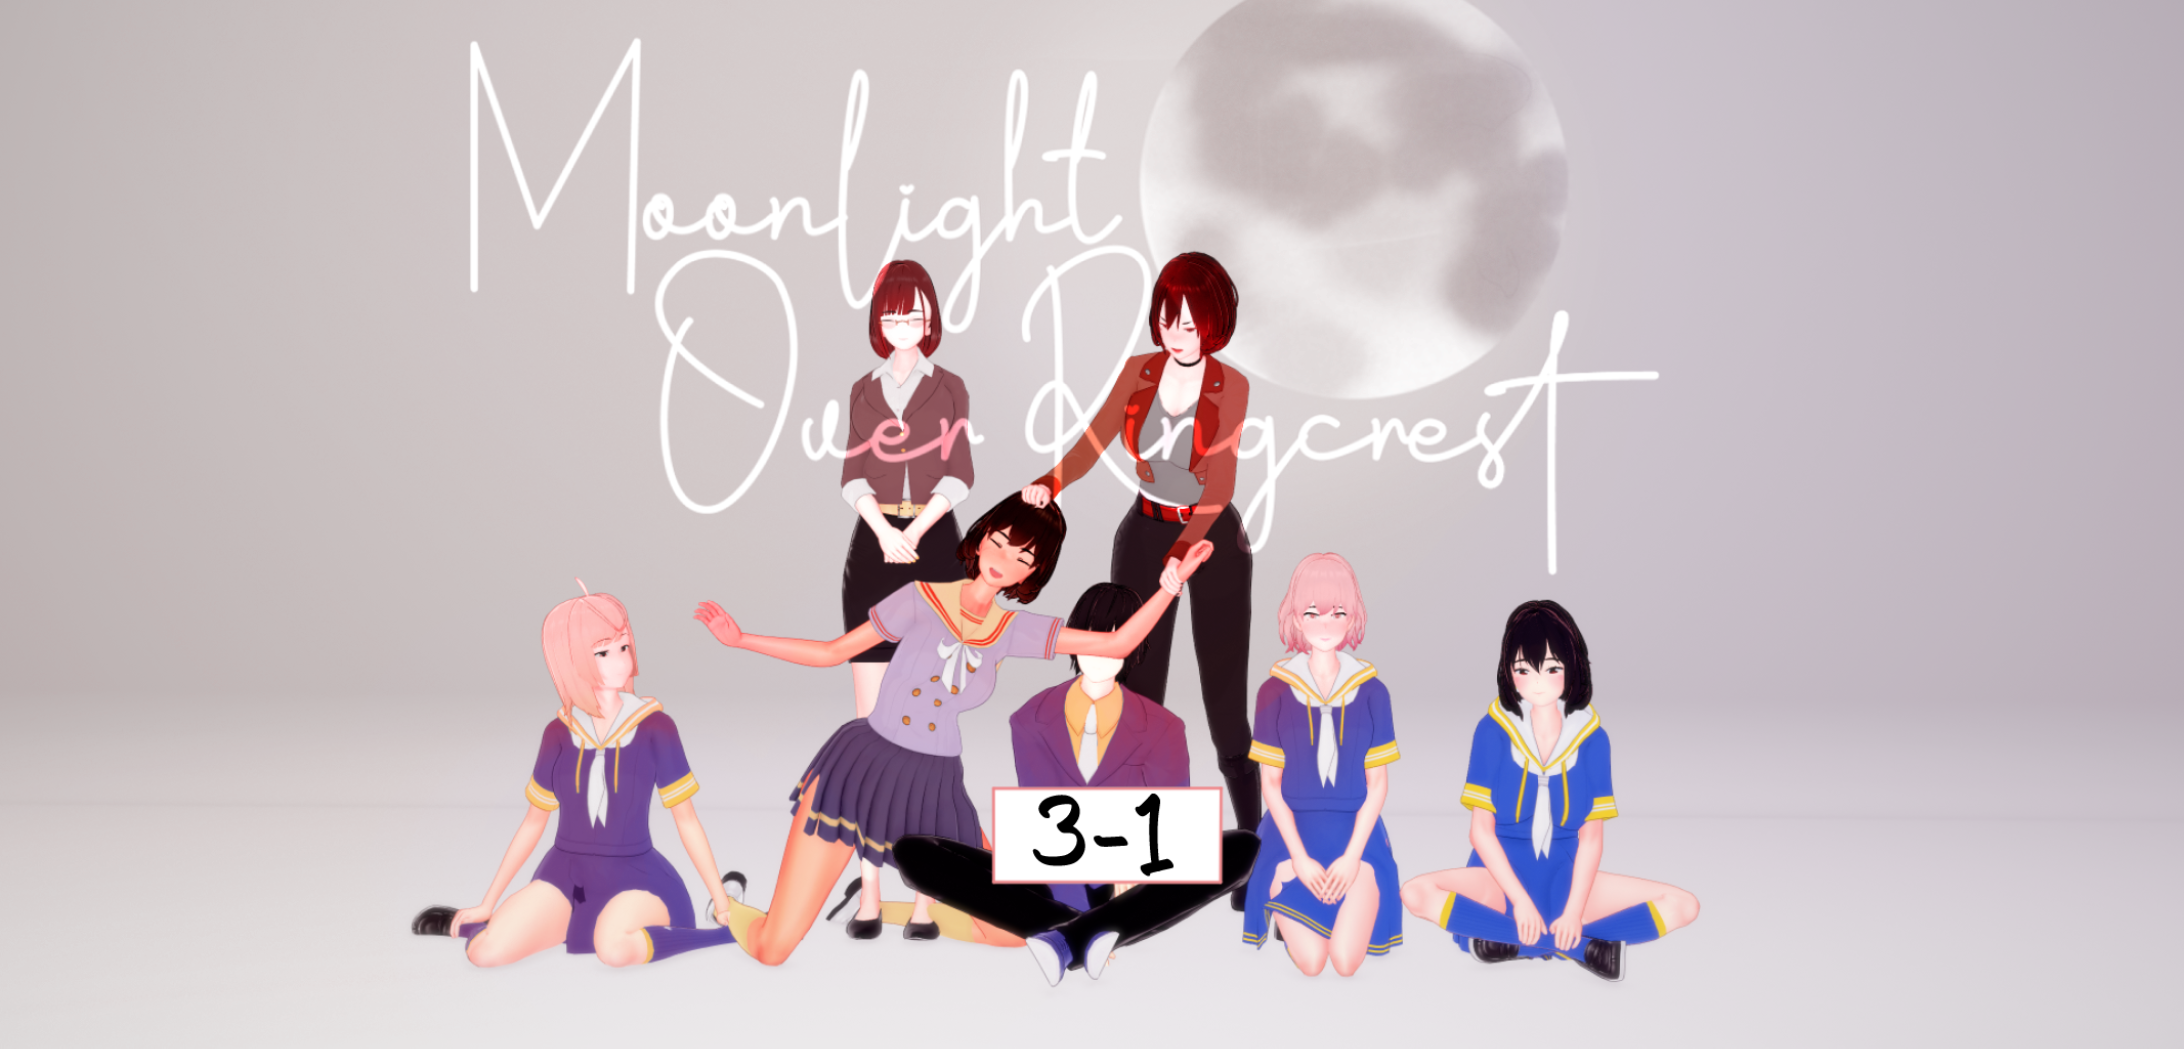 Moonlight Over Ringcrest (18+)